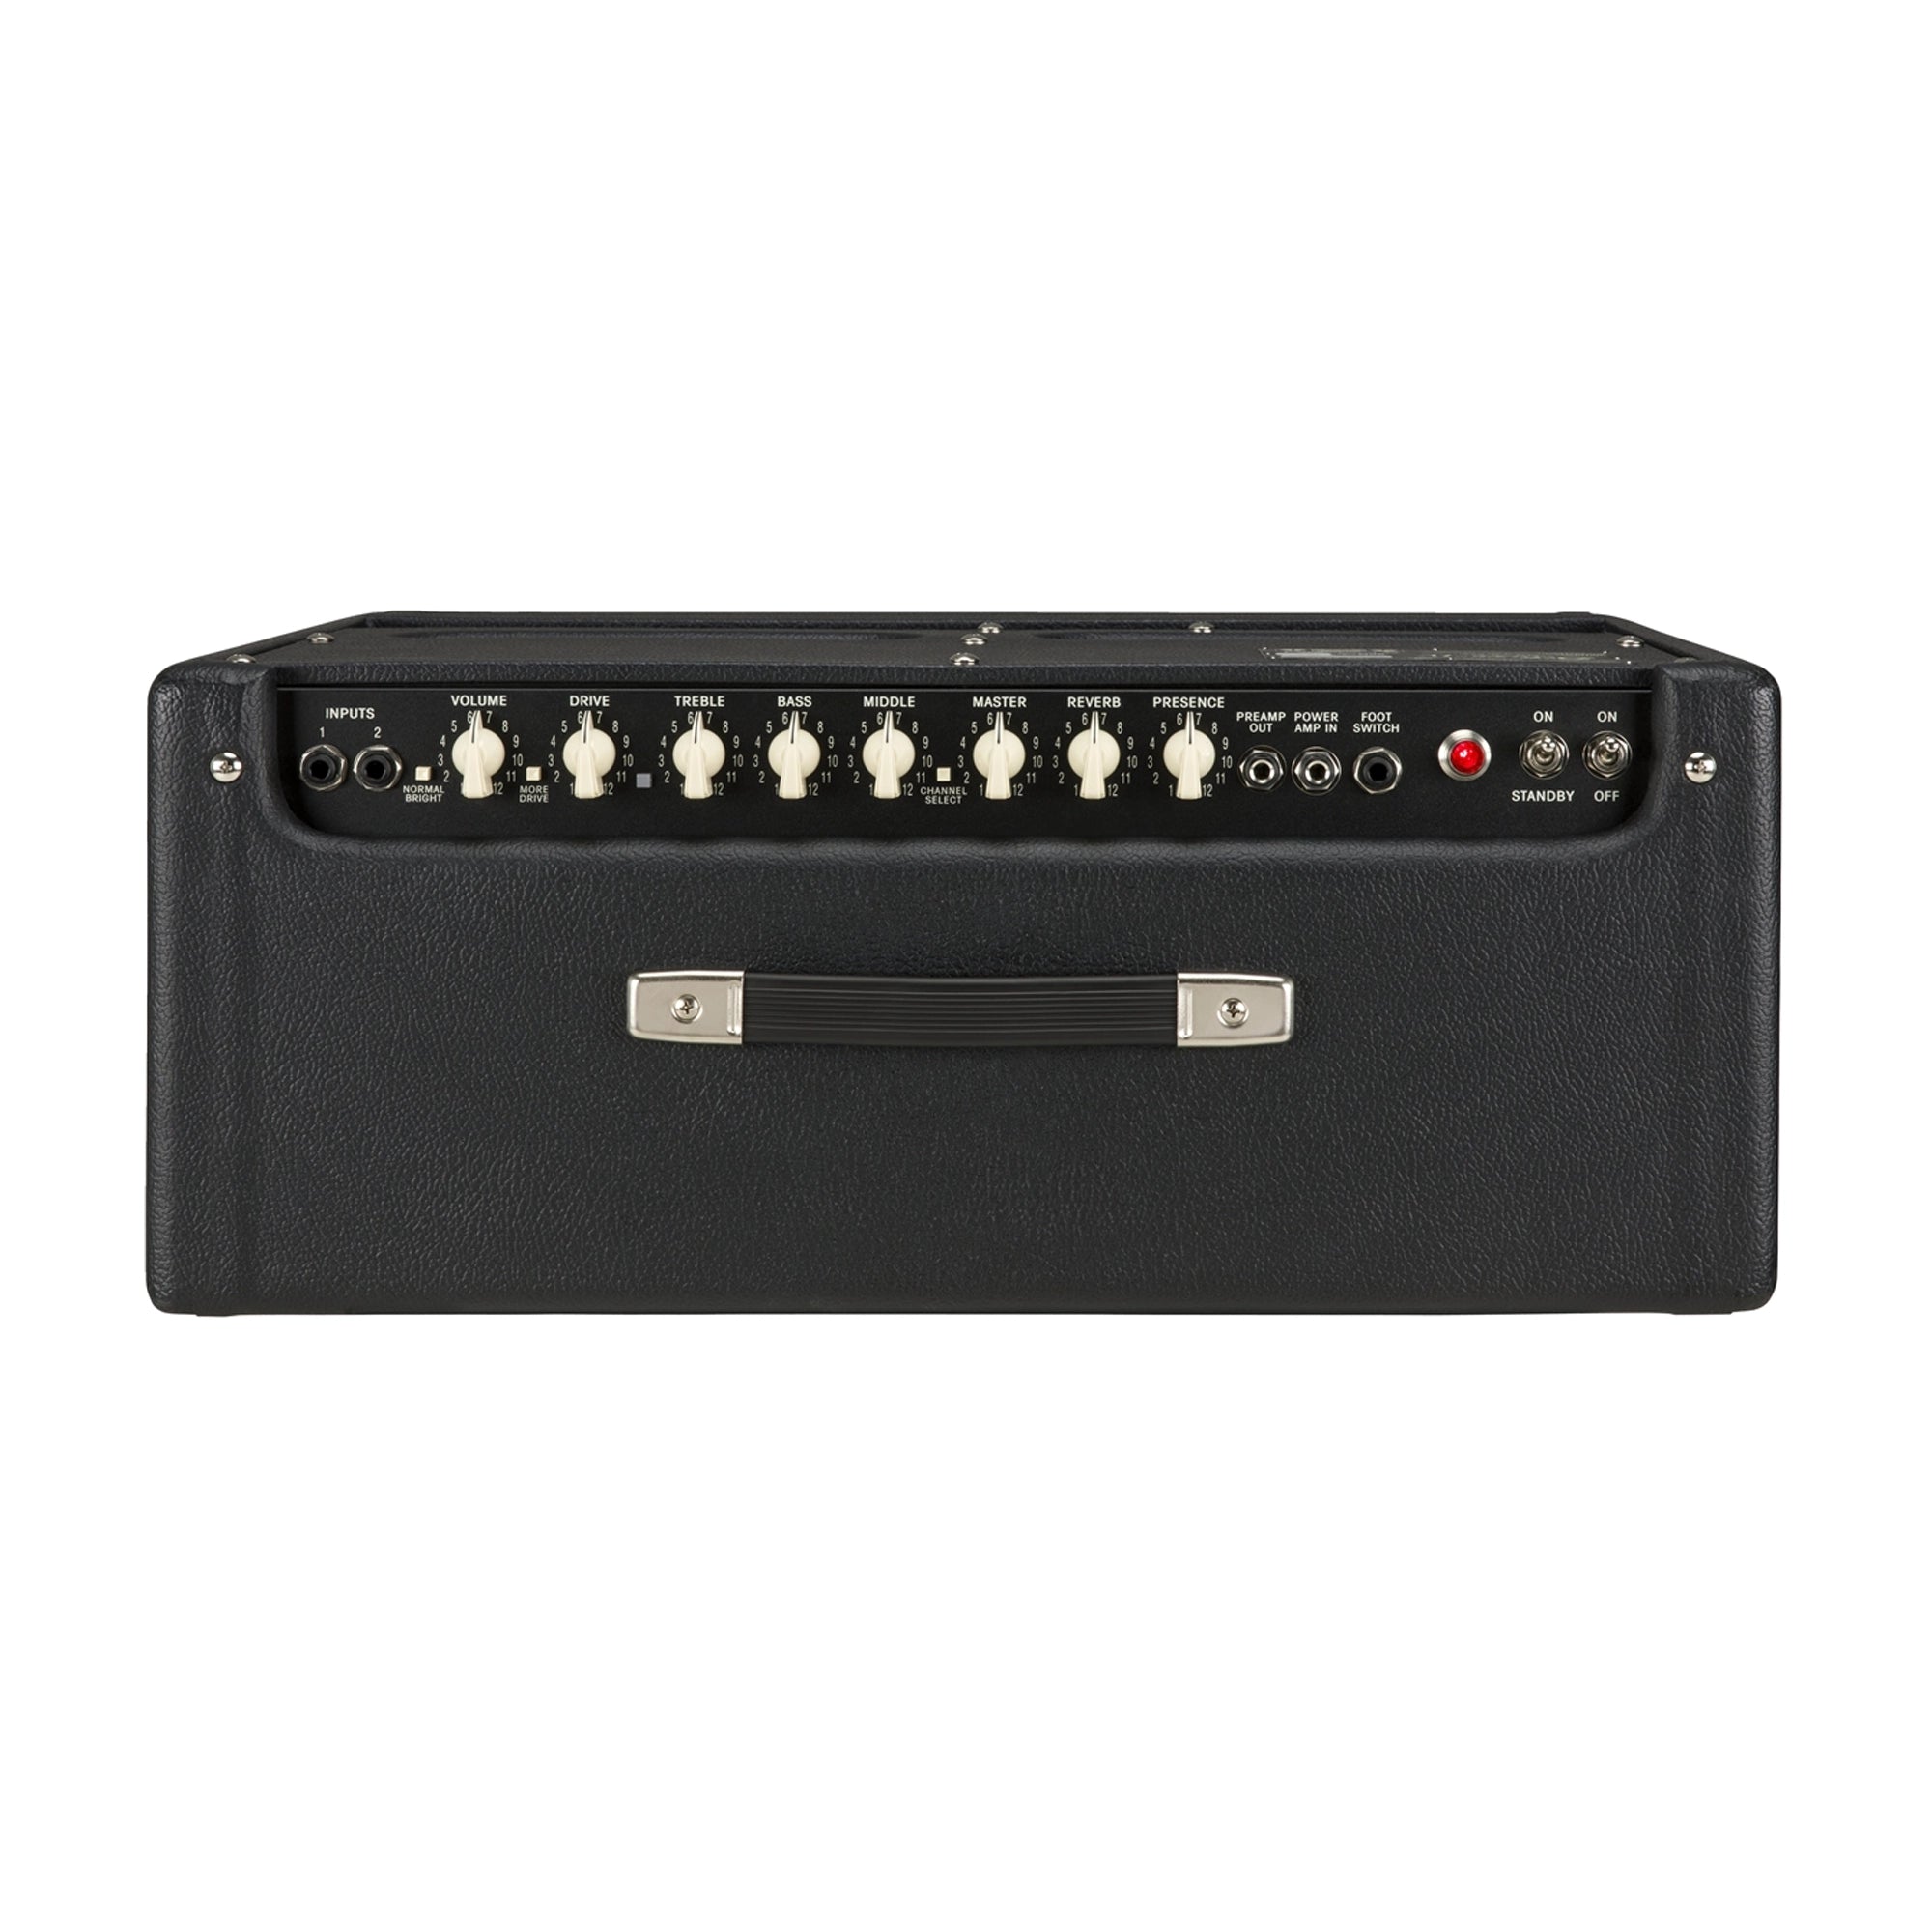 Fender Hot Rod Deluxe IV 40W 1x12 Tube Guitar Combo Amplifier Black